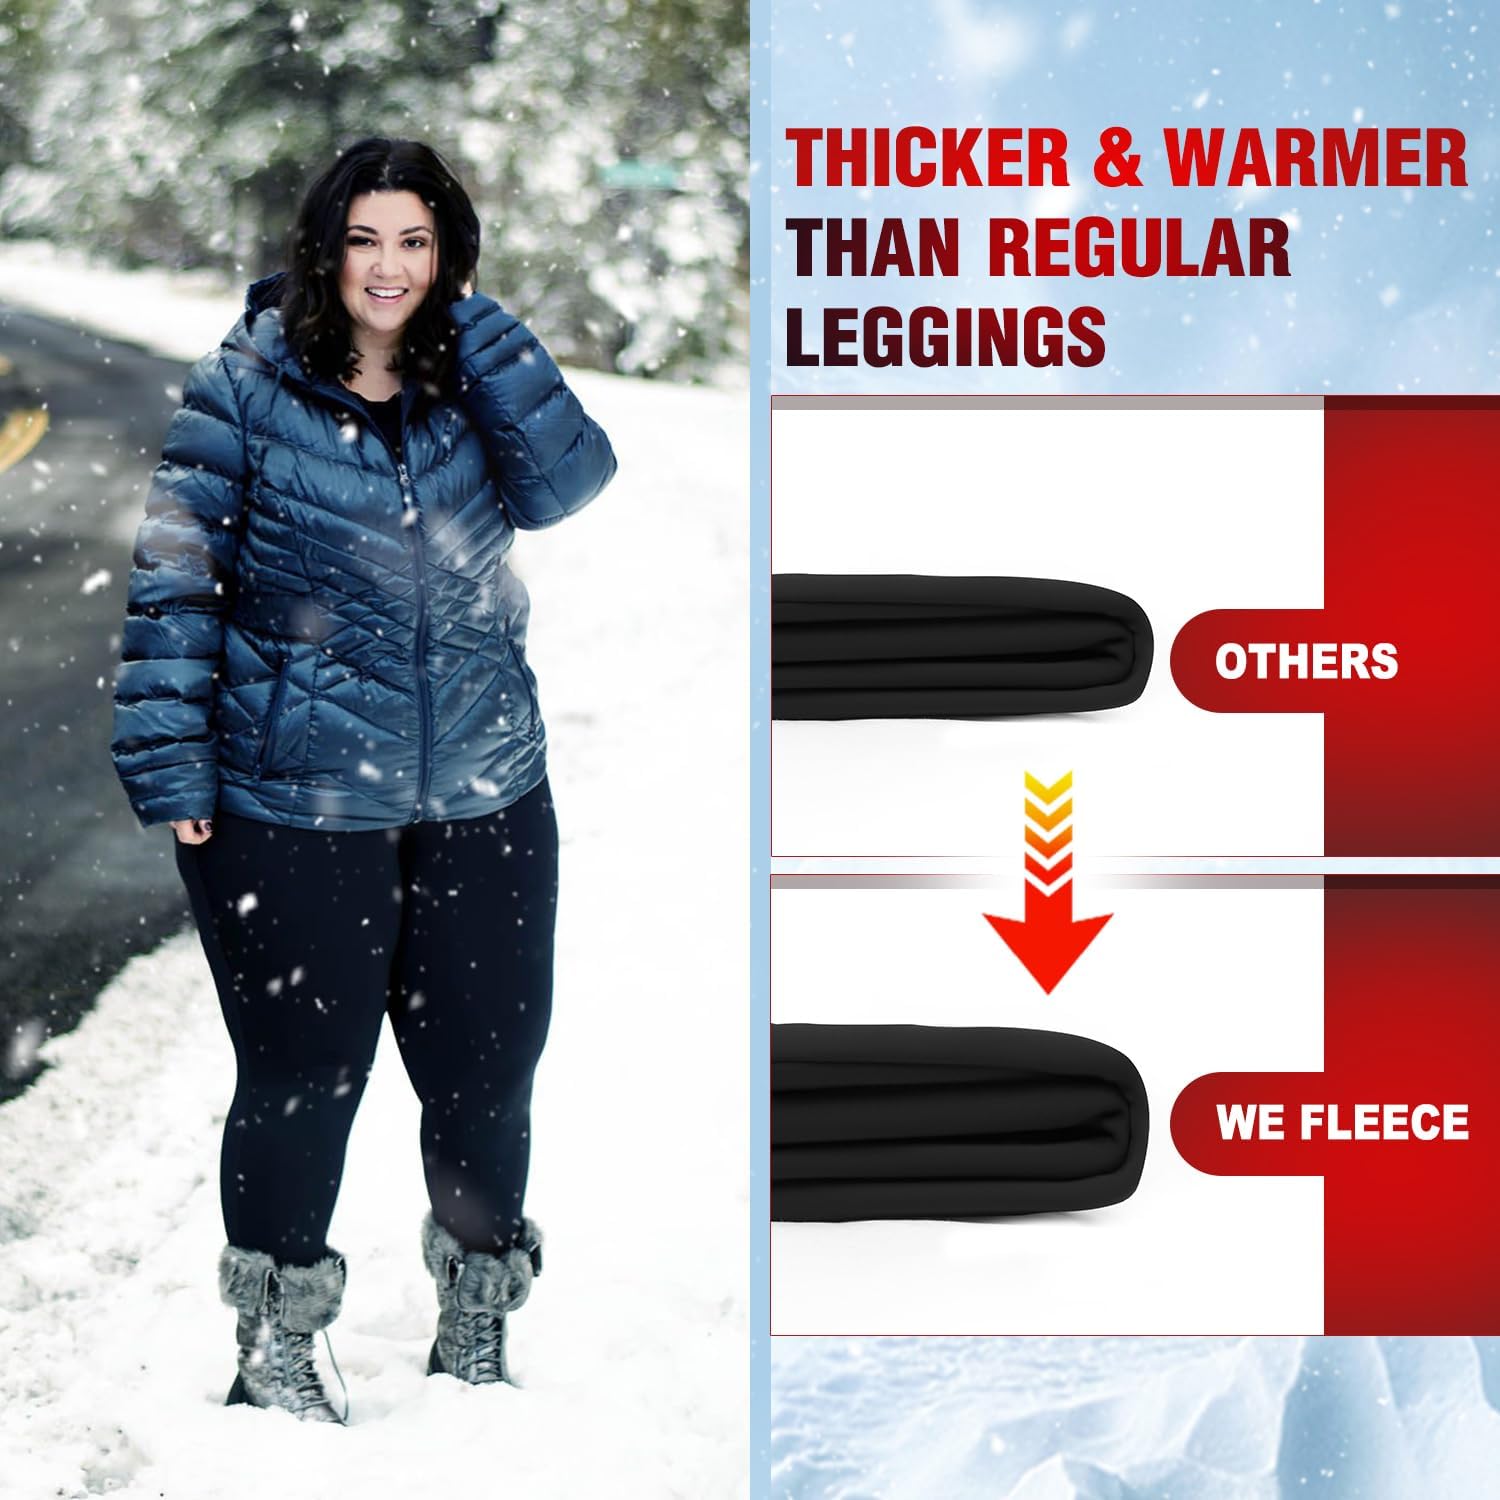 we fleece 3 Pack Plus Size Fleece Lined Leggings Women -Stretchy X-Large-4X Warm Winter Yoga Pants Thermal Leggings